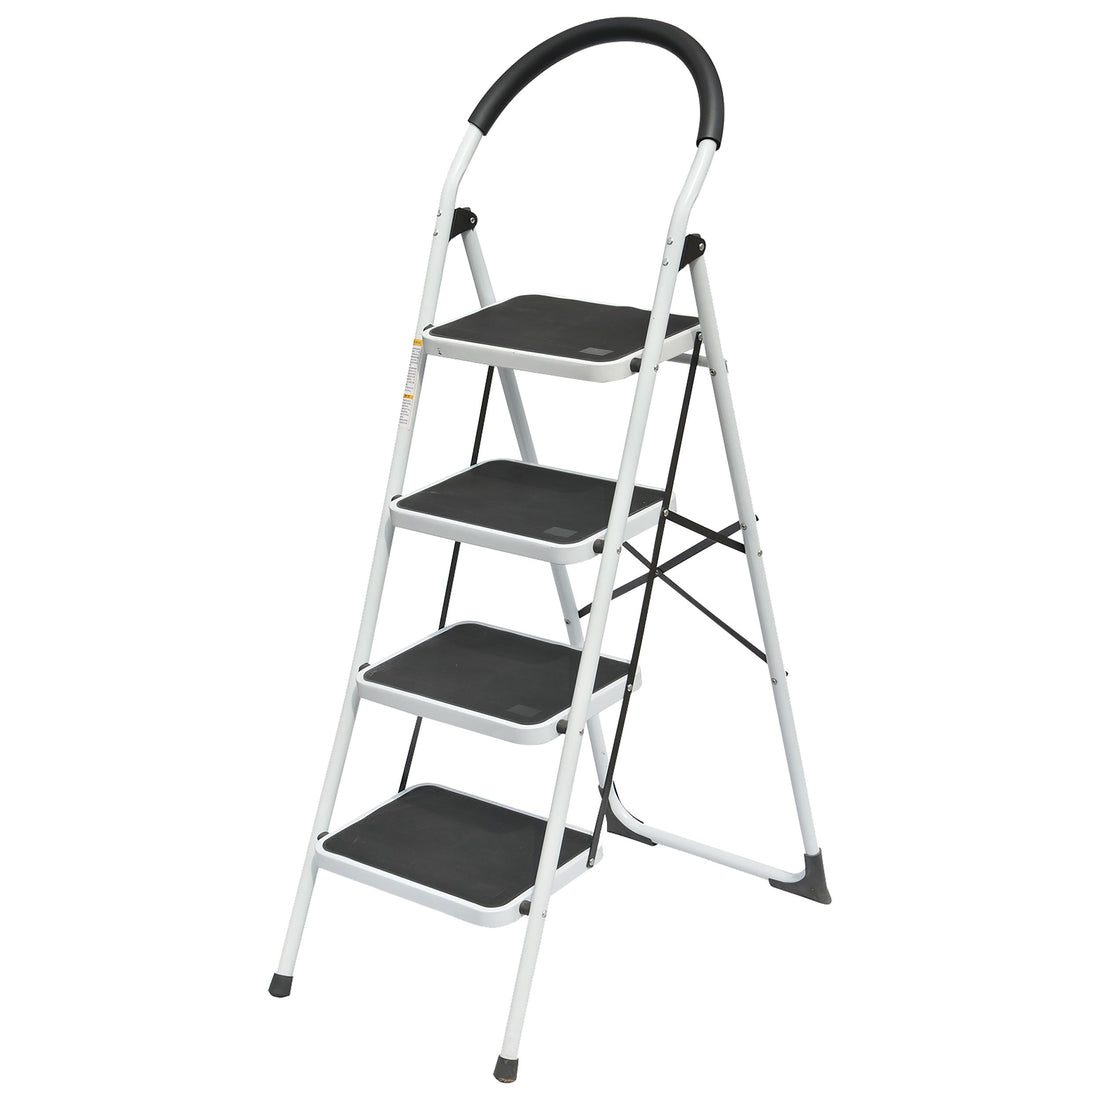 Safeline Household Ladder